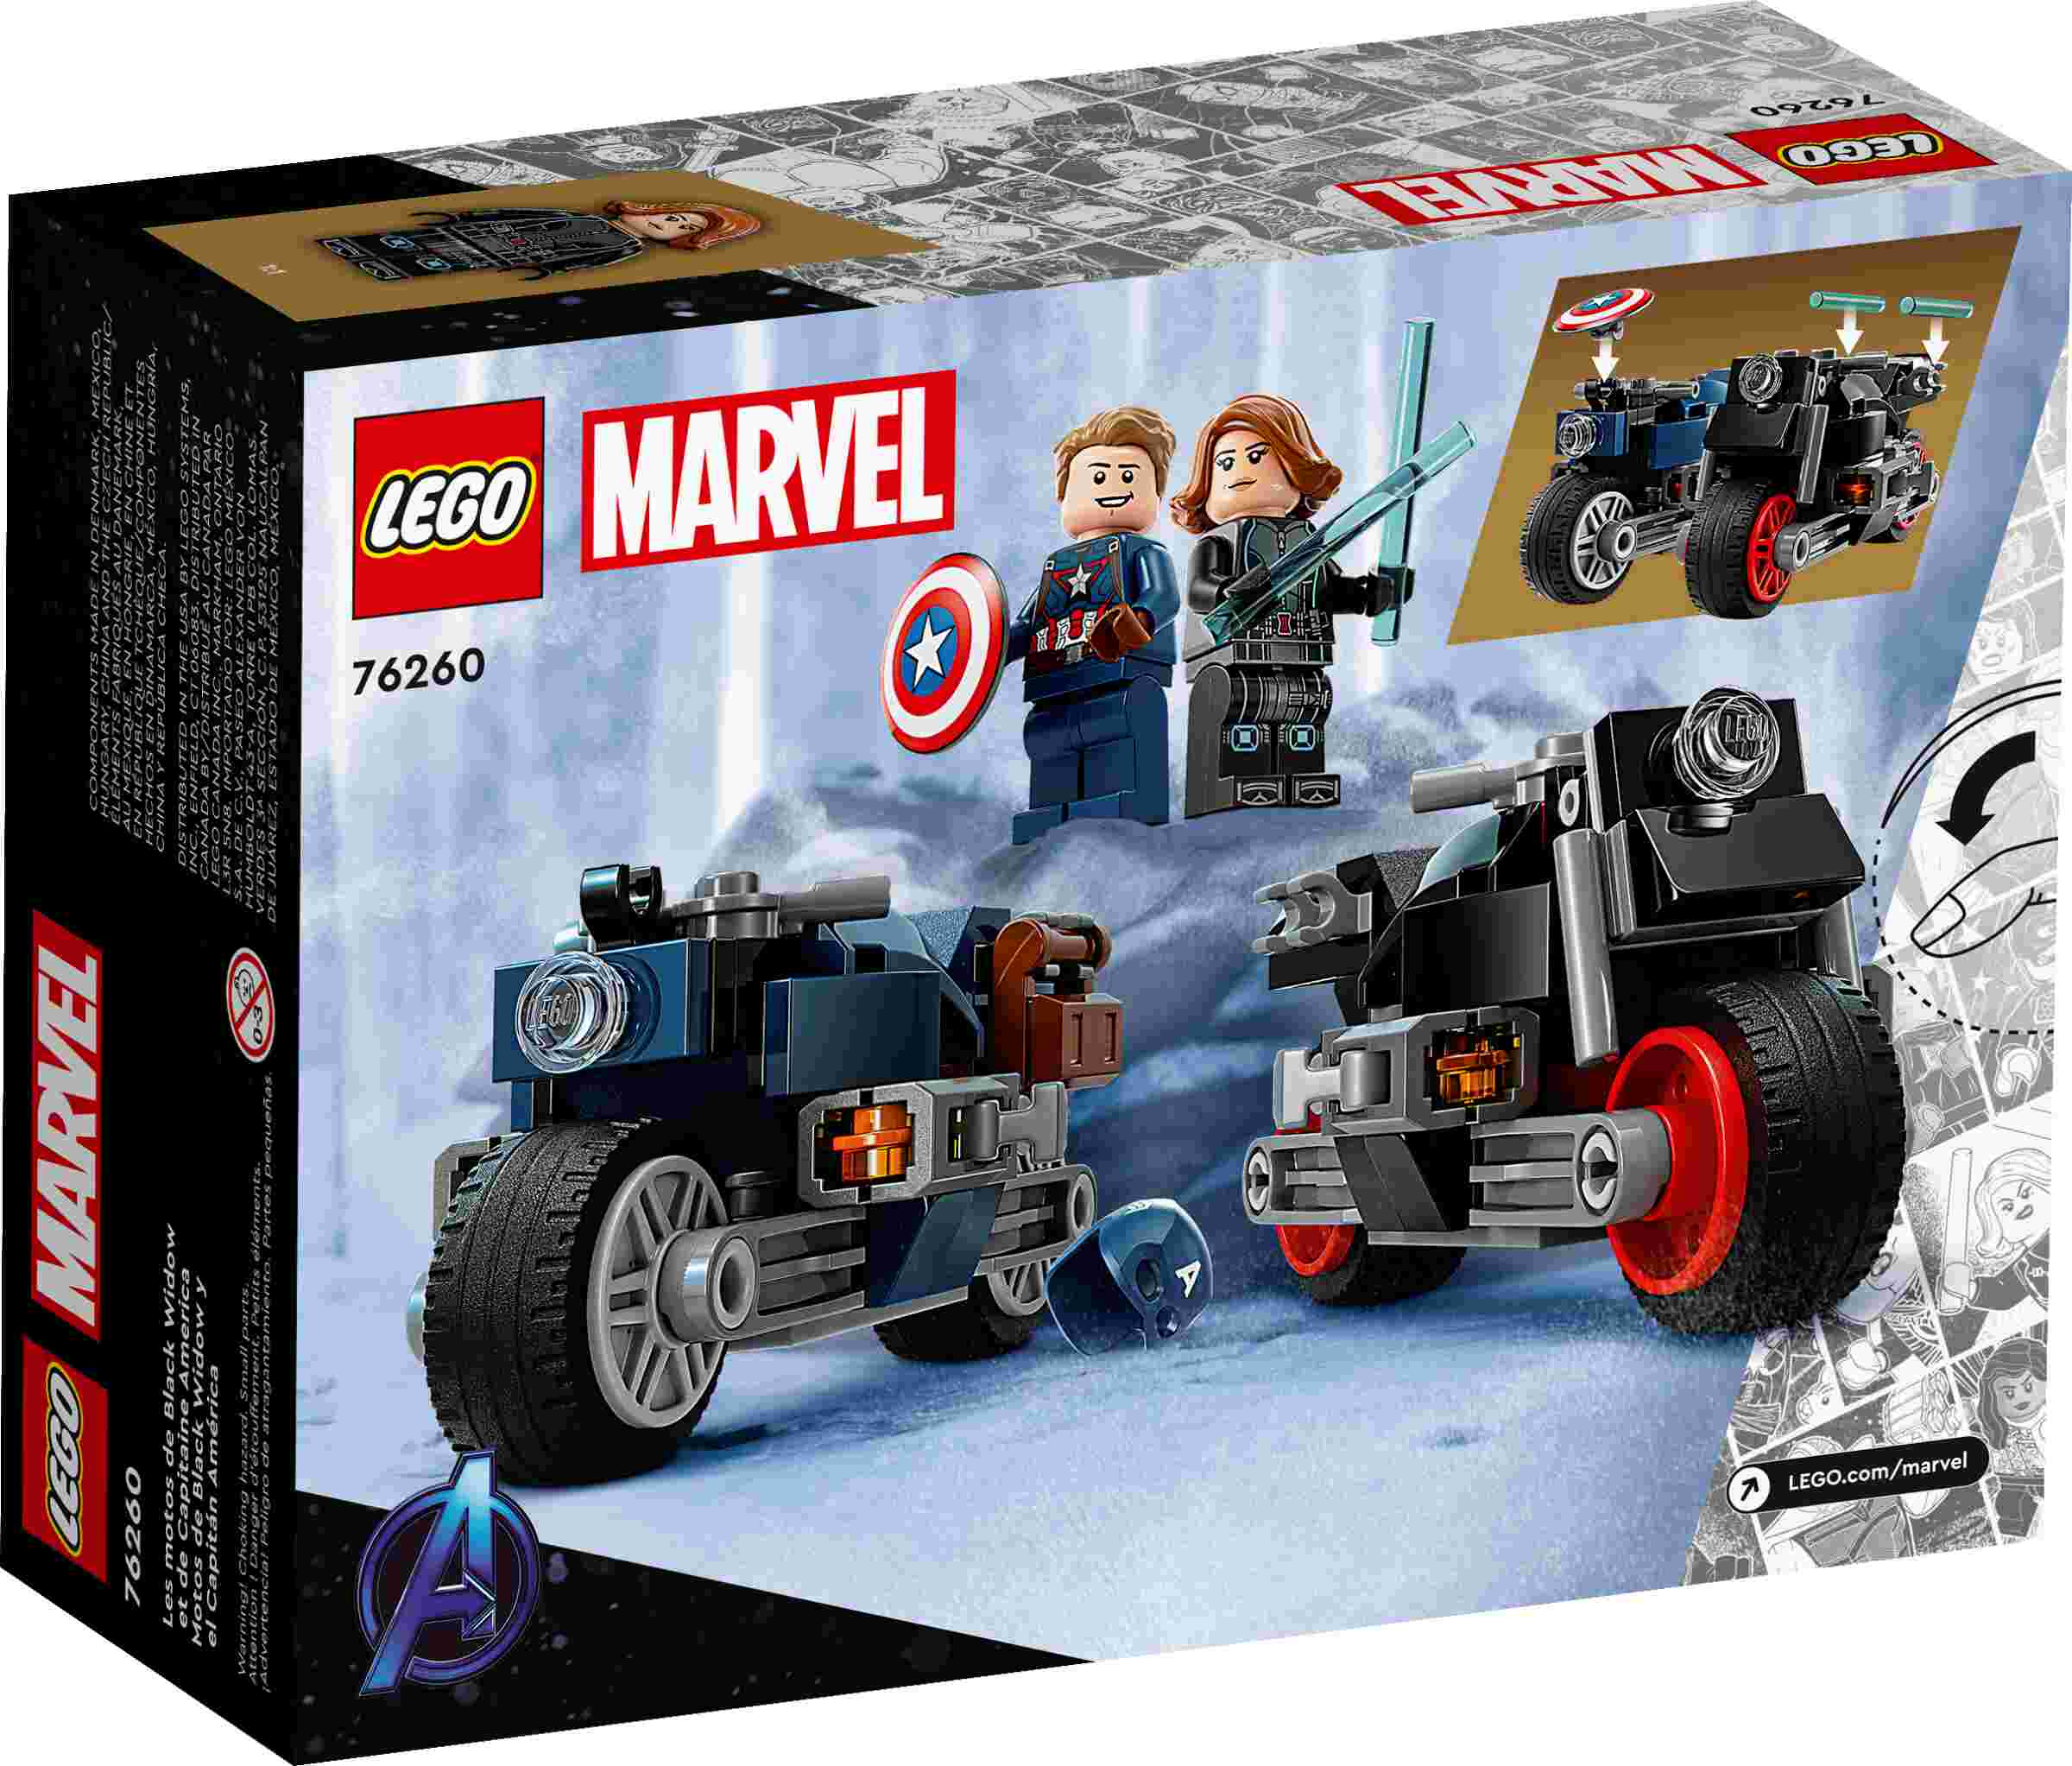 LEGO 76260 Marvel Black Widows & Captain Americas Motorräder, Avengers